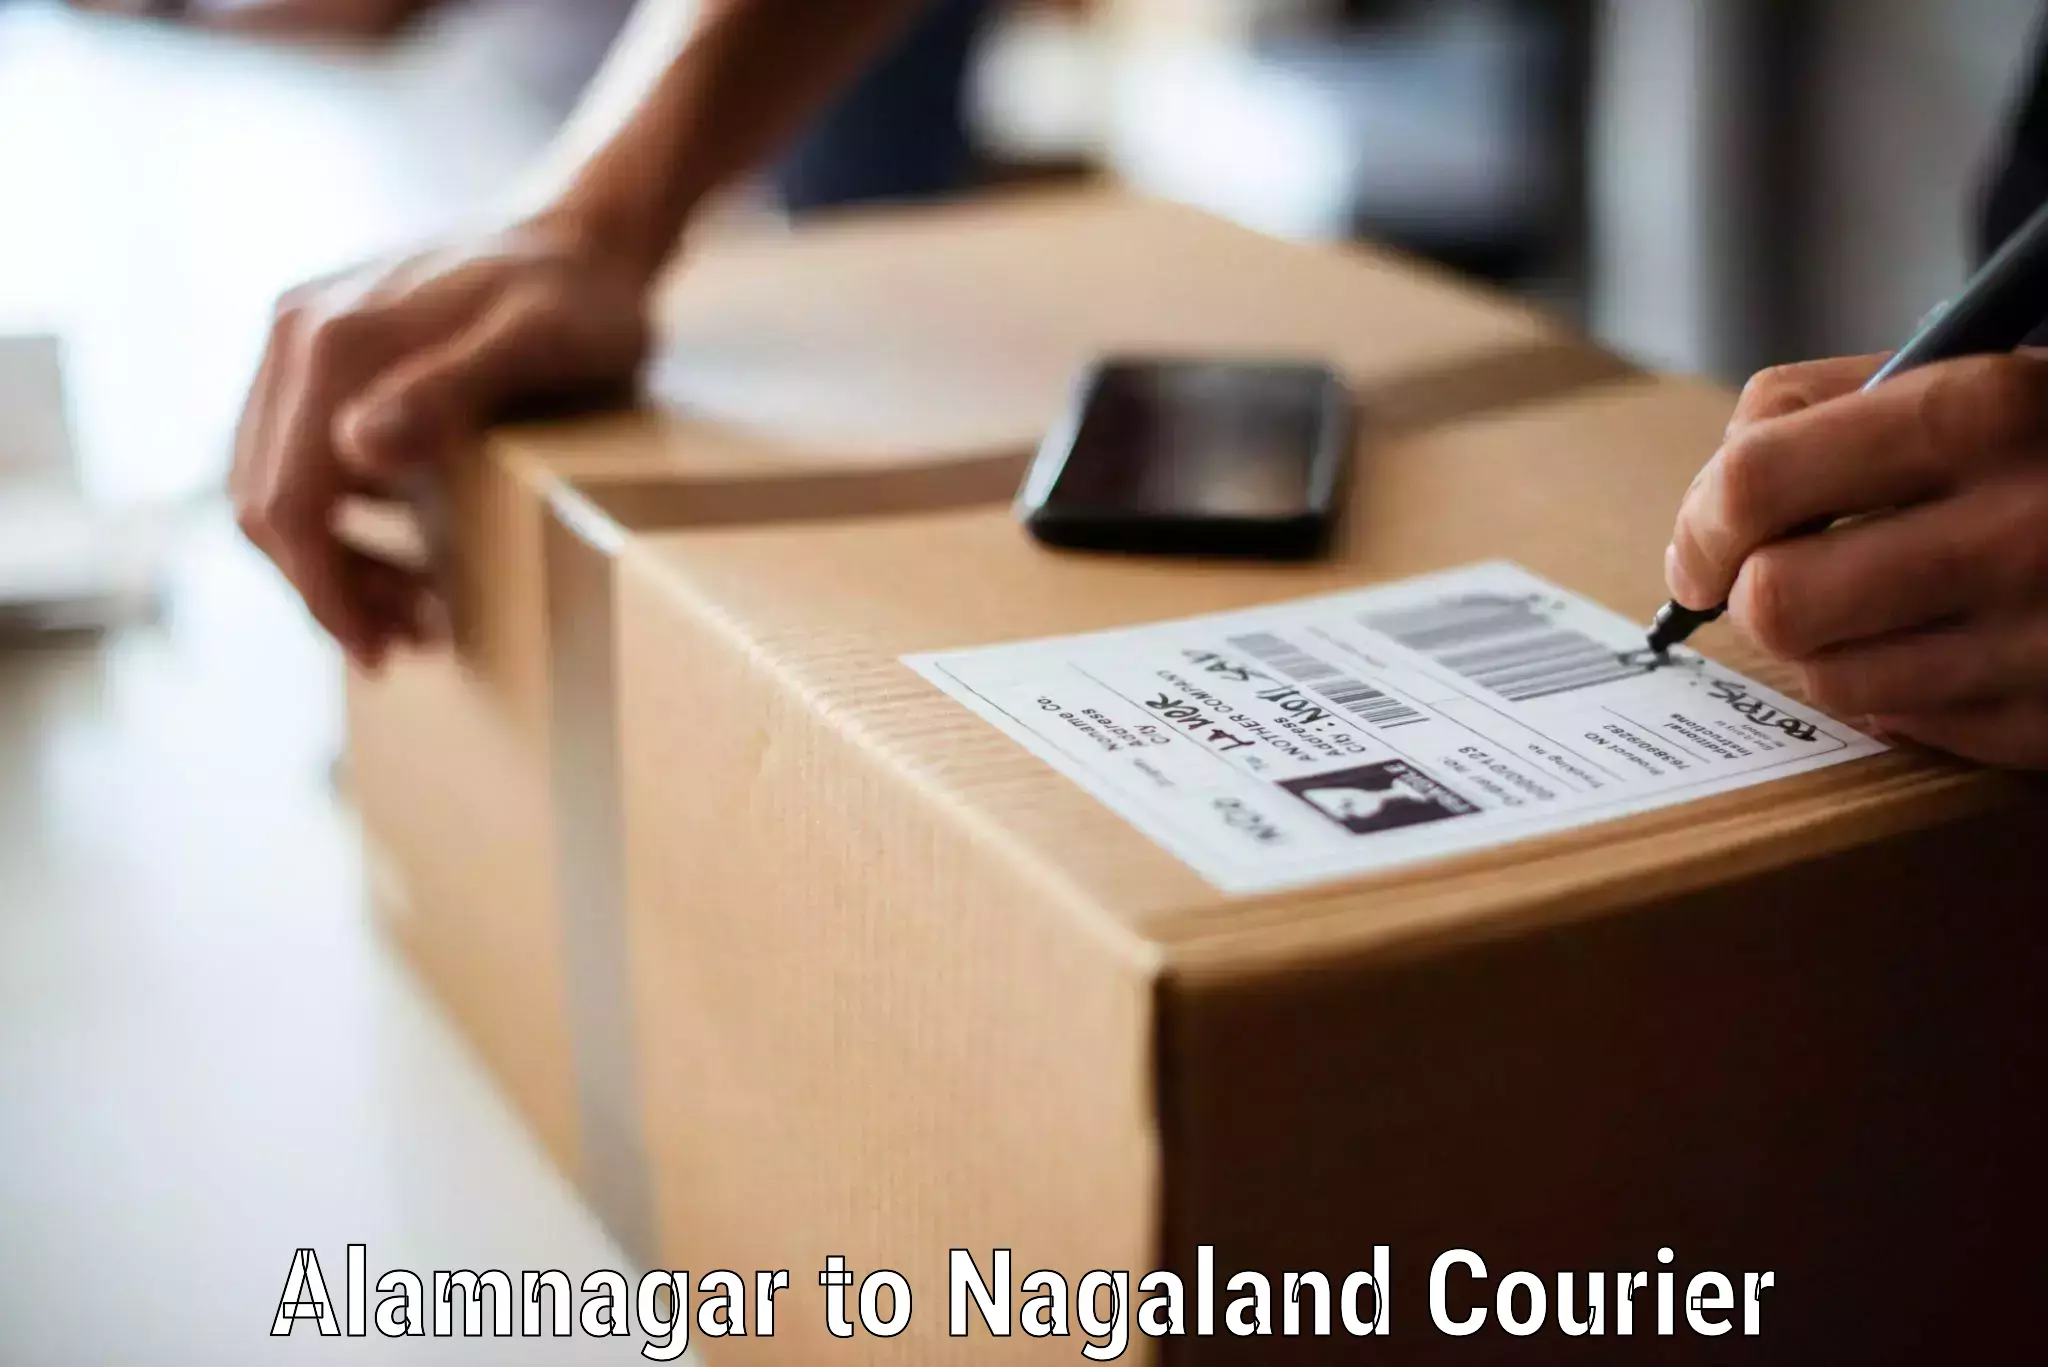 Professional movers and packers Alamnagar to Nagaland